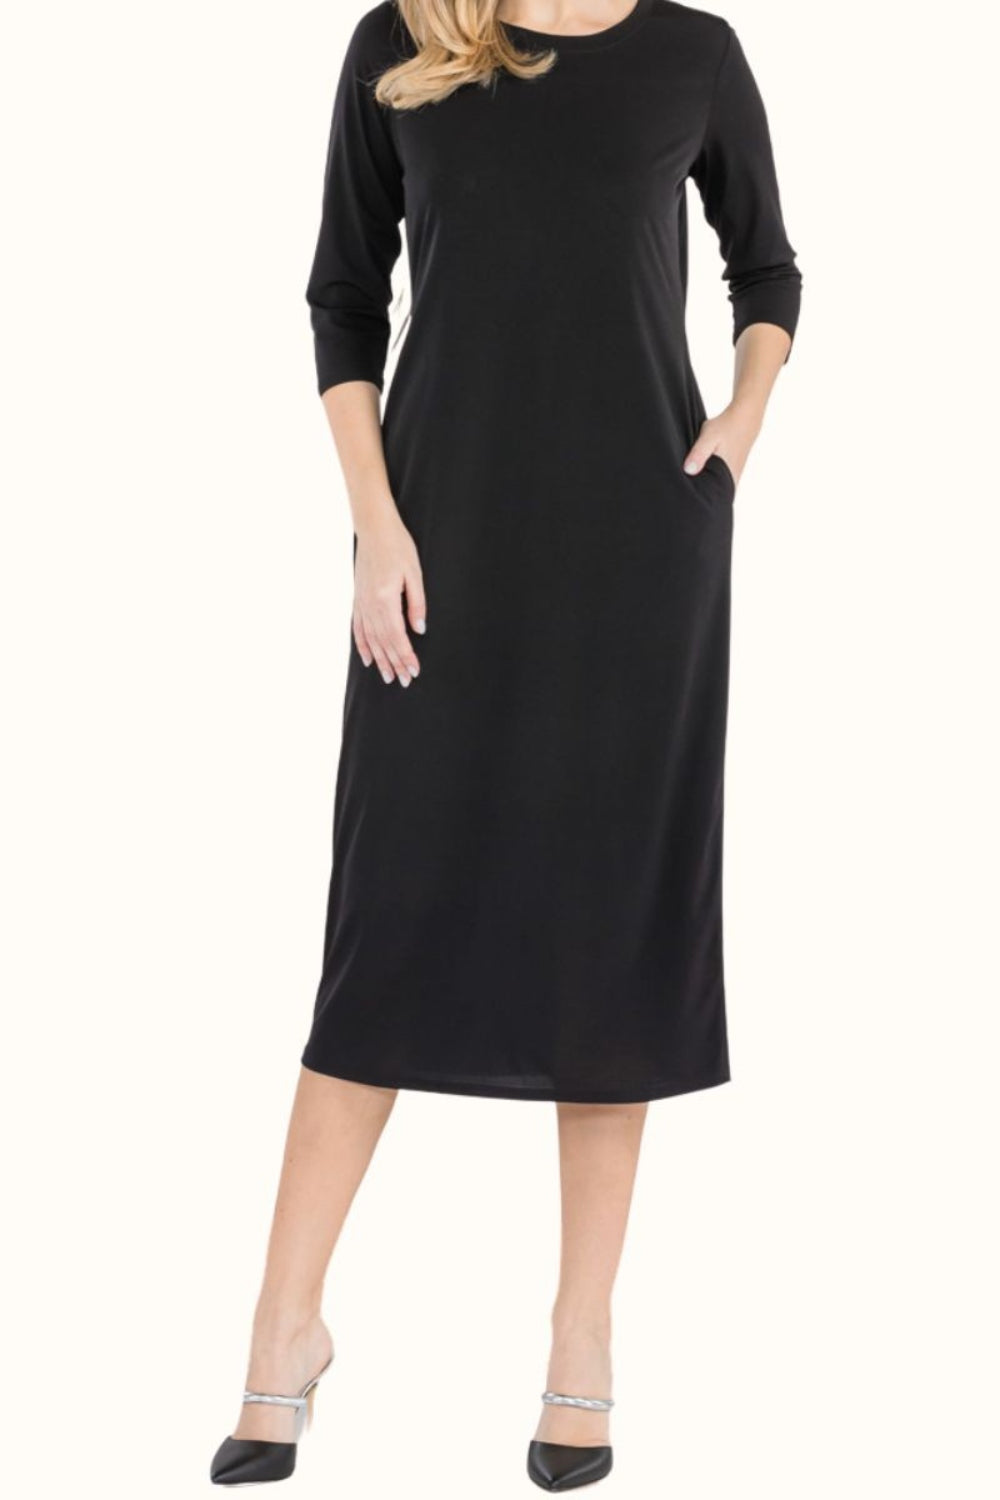 Celeste Elegant Full Size Round Neck Midi Dress - Sophistication Meets Comfort